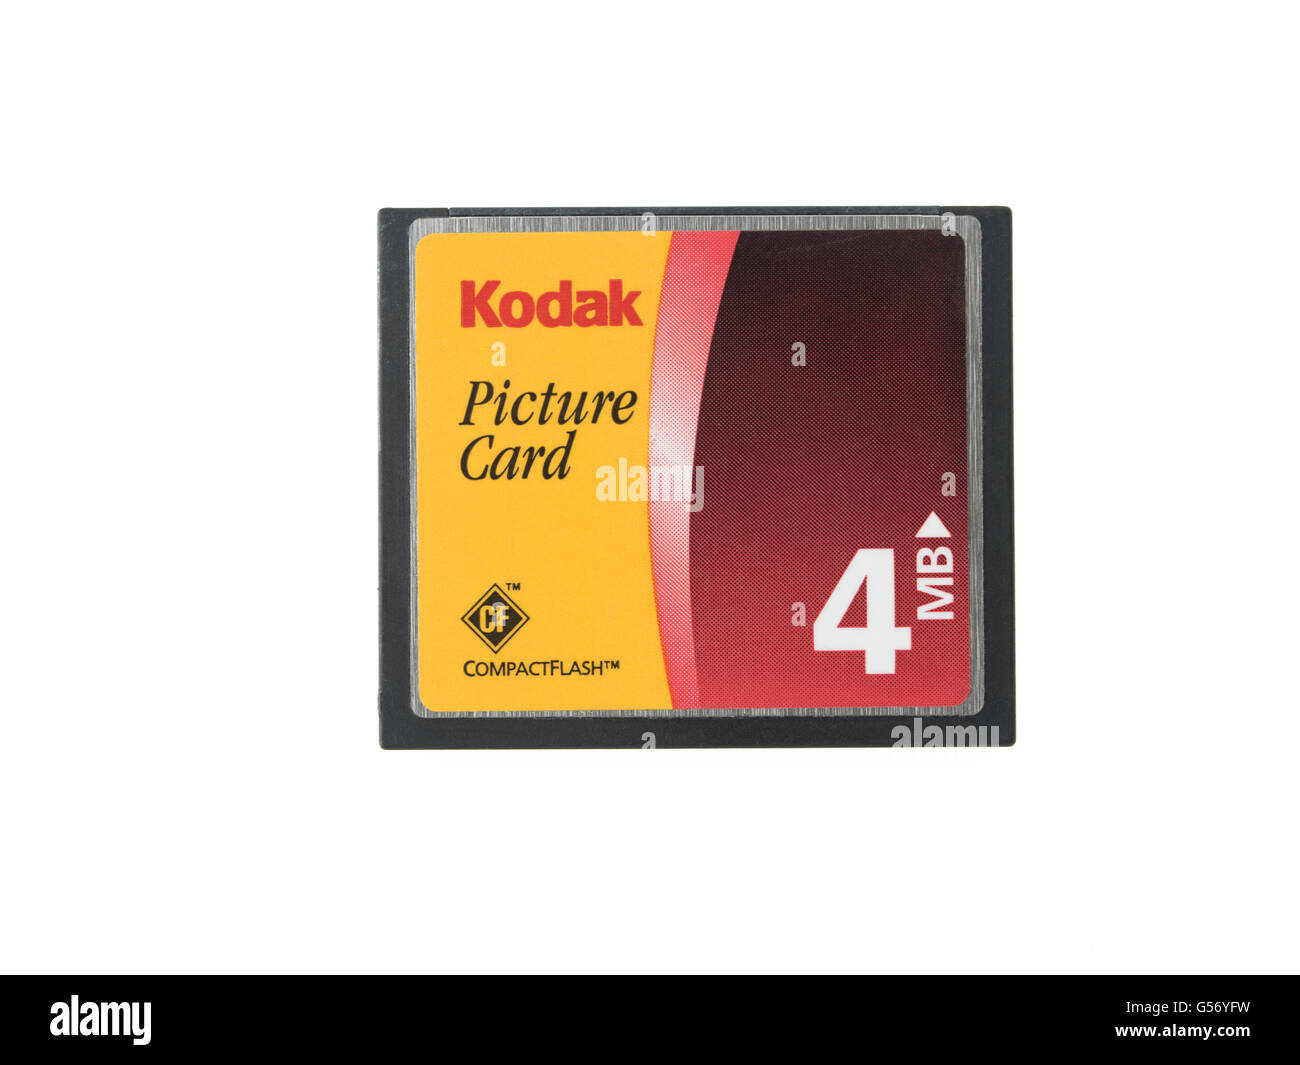 Compact Flash KODAK Picture Card de 4MB de almacenamiento digital media Foto de stock